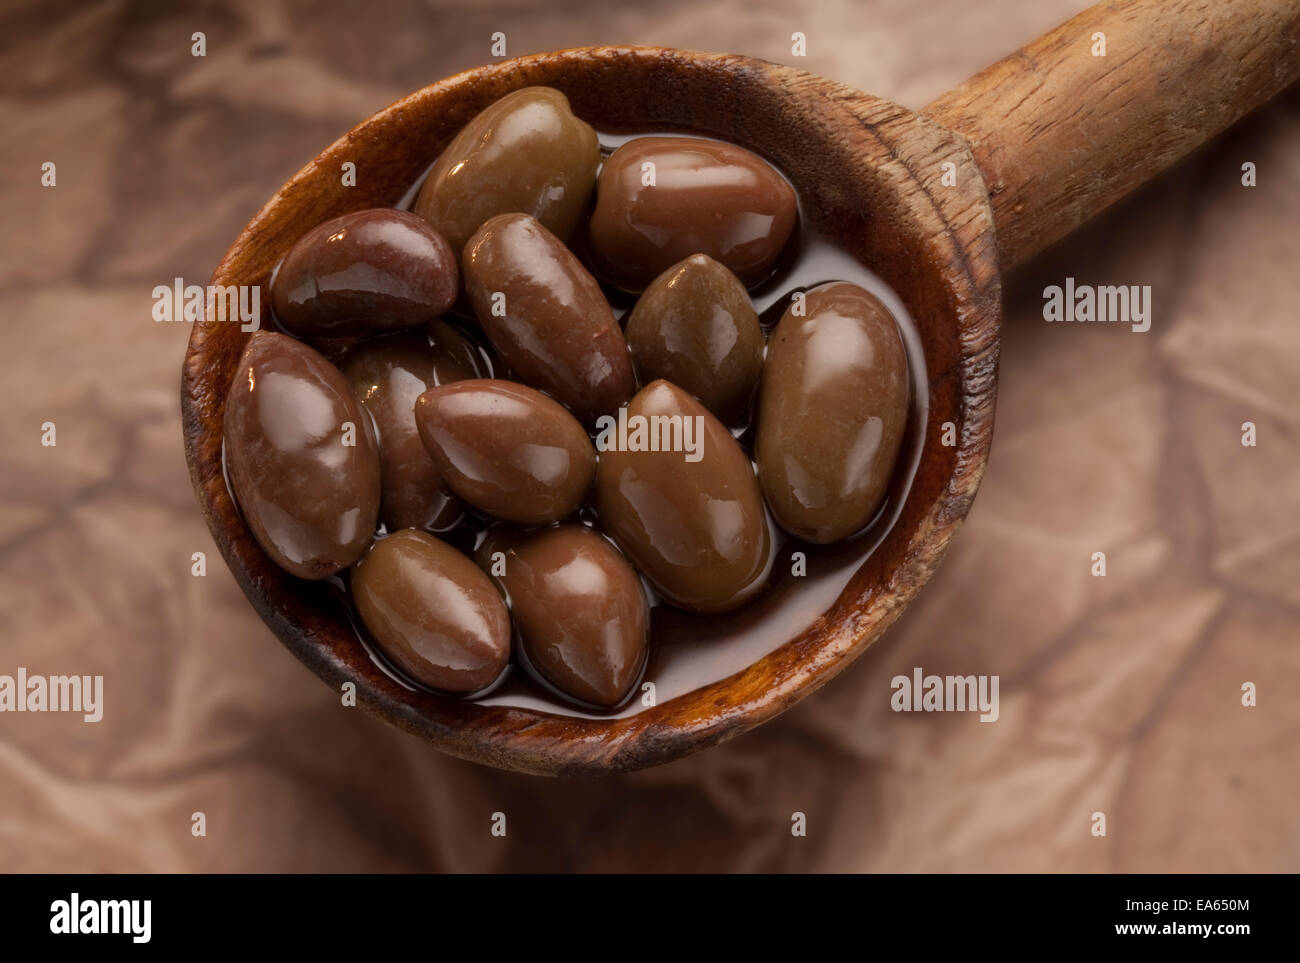 wooden spoon full of Kalamata olives Stock Photo